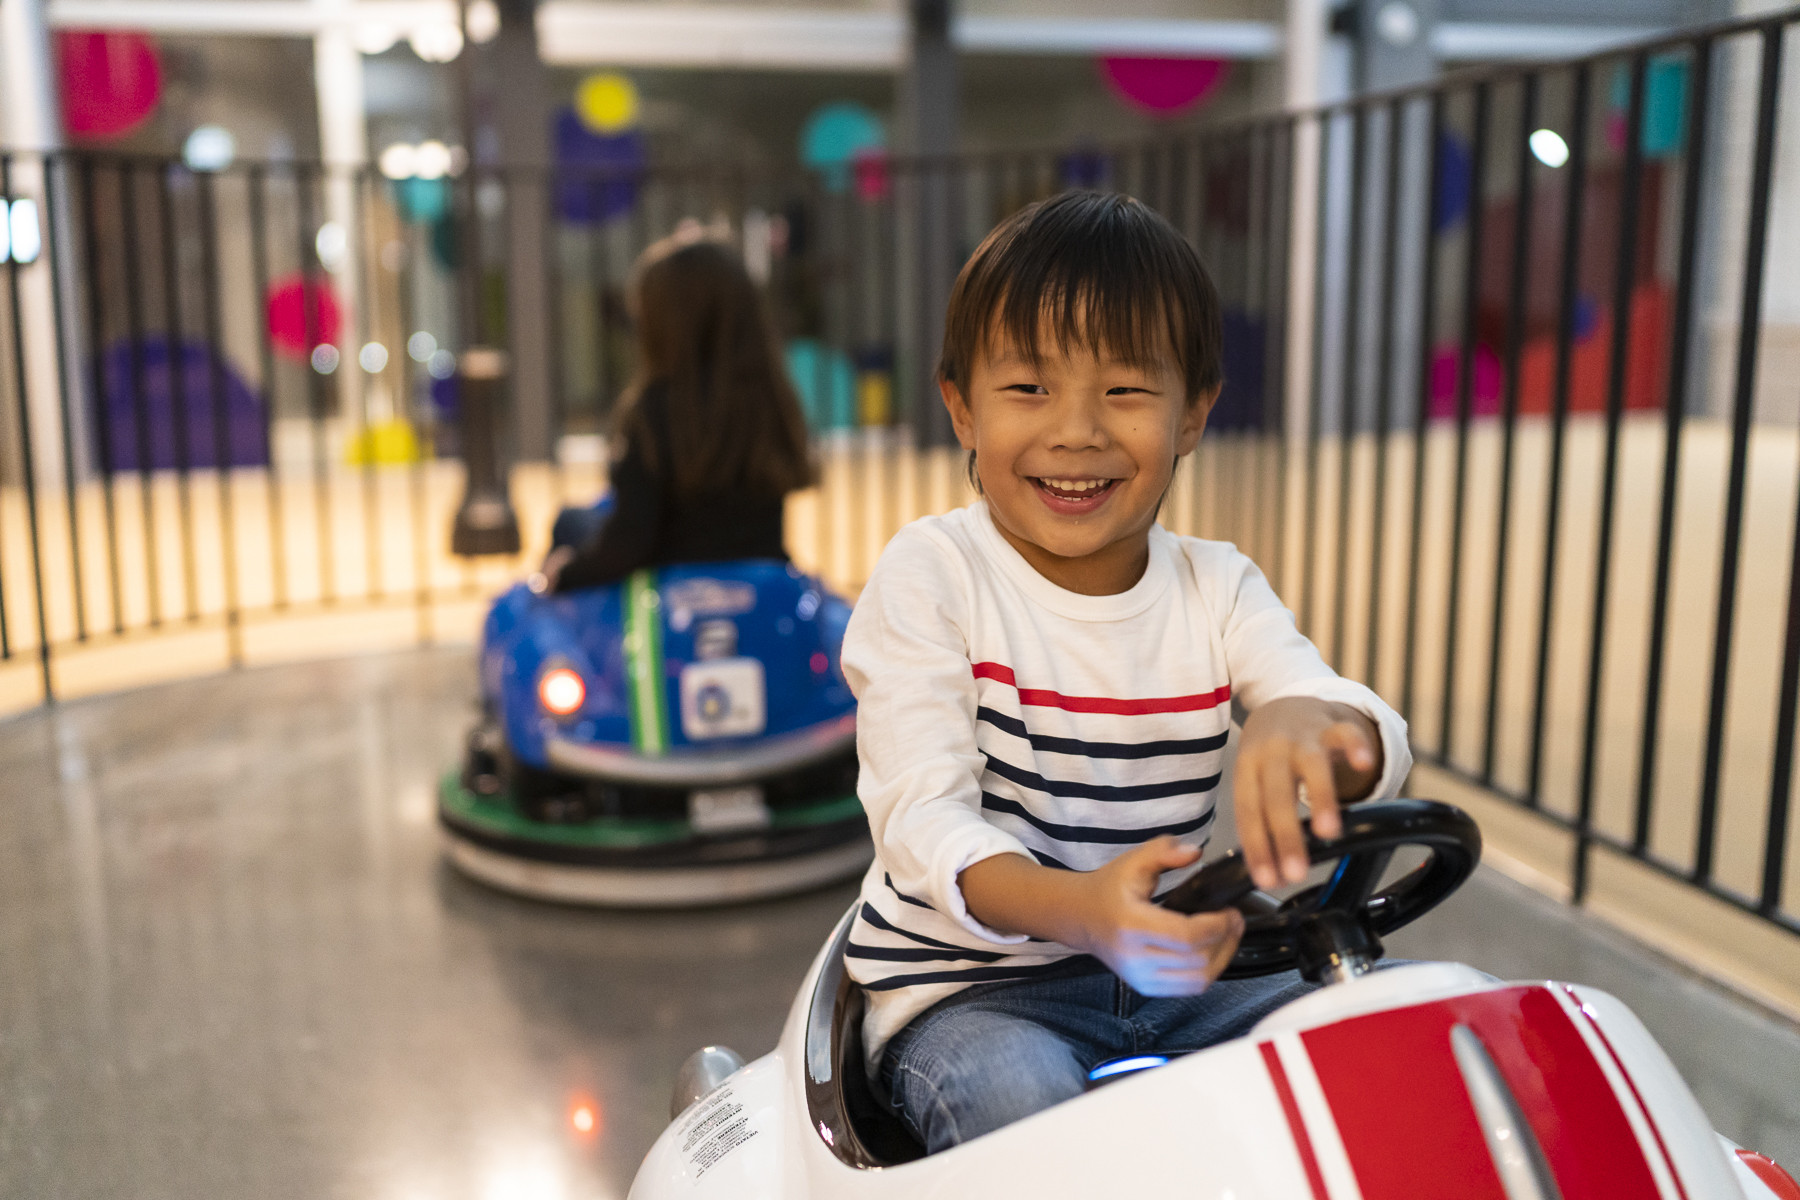 A small boy rides a miniature car indoors at KidZania.